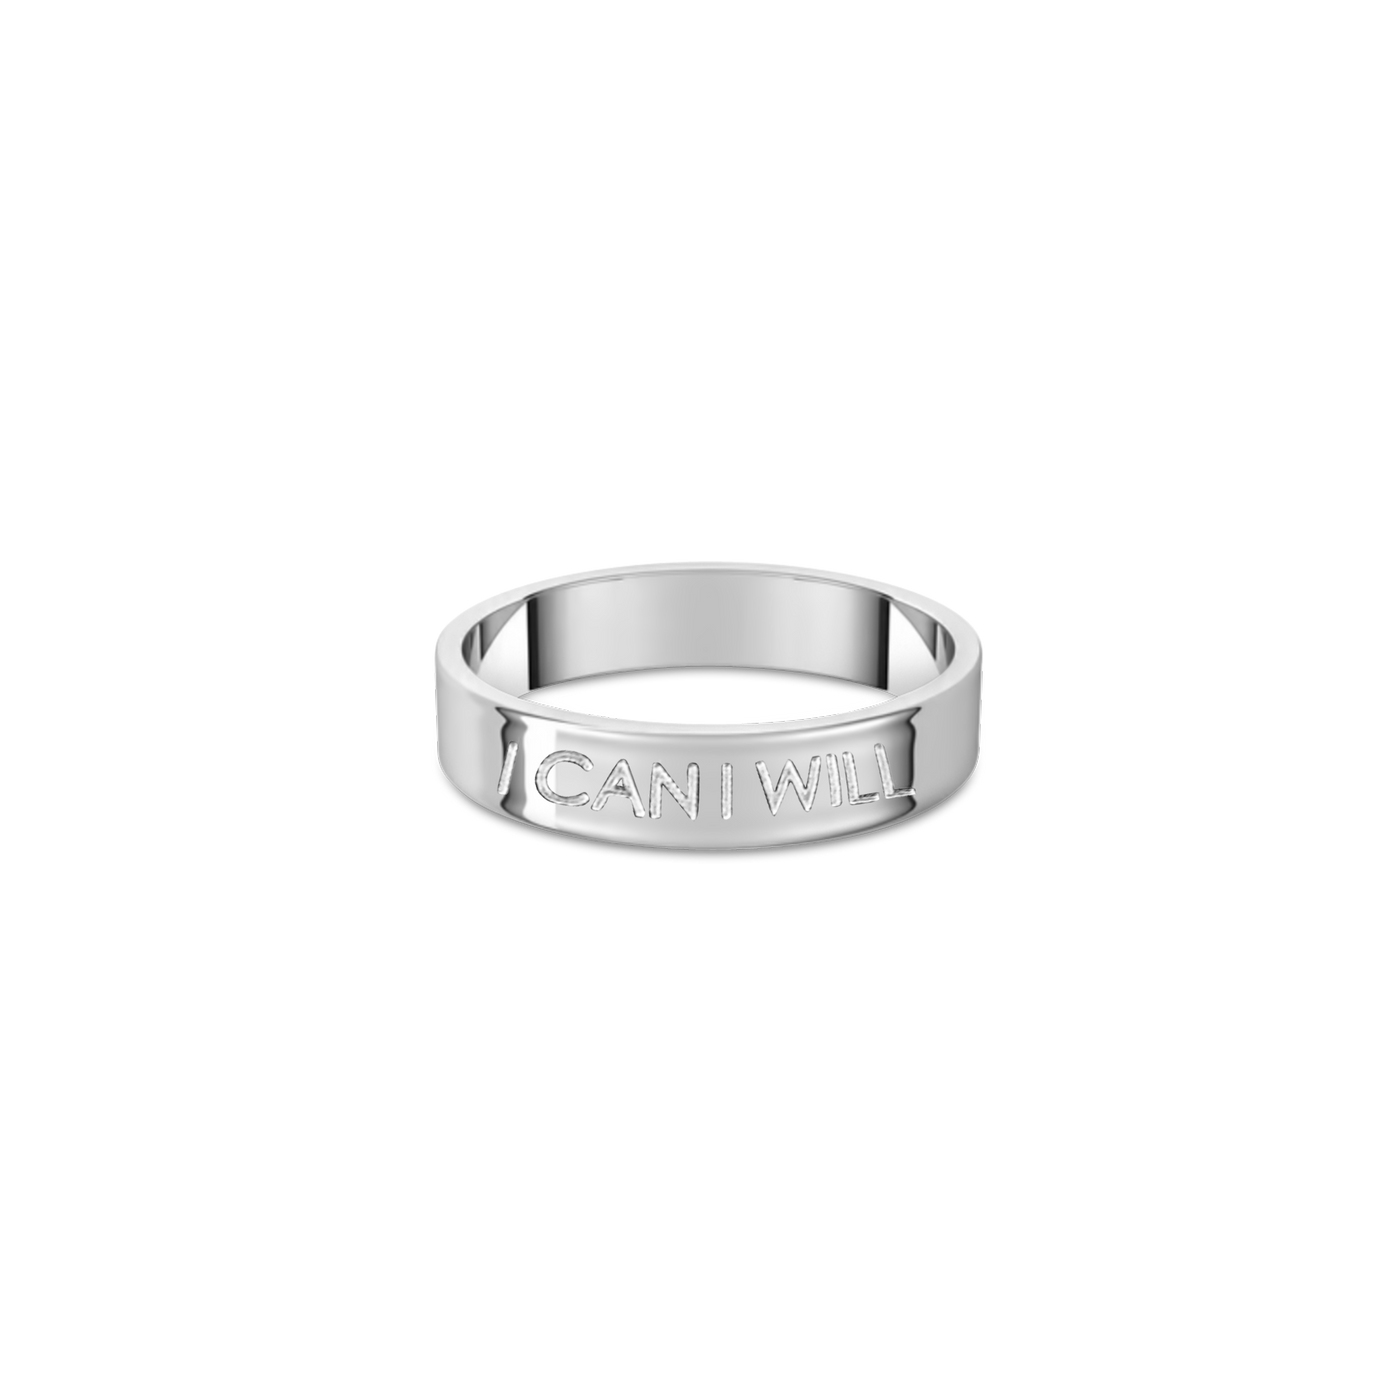 Mantra Engraved Ring